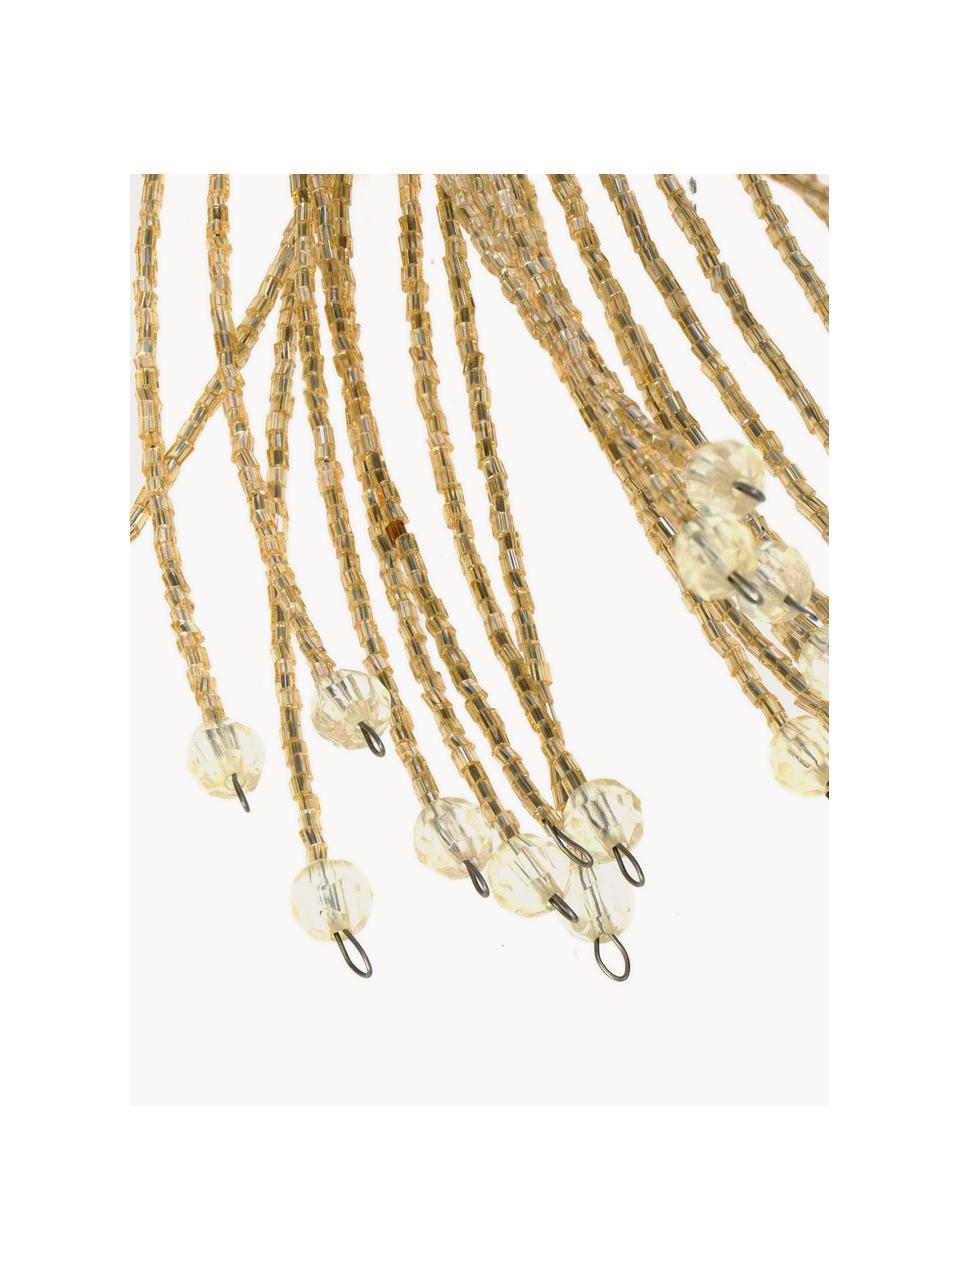 Baumschmuck Beads mit Perlen, 2 Stück, Glas, Metall, beschichtet, Goldfarben, Ø 40 x H 58 cm